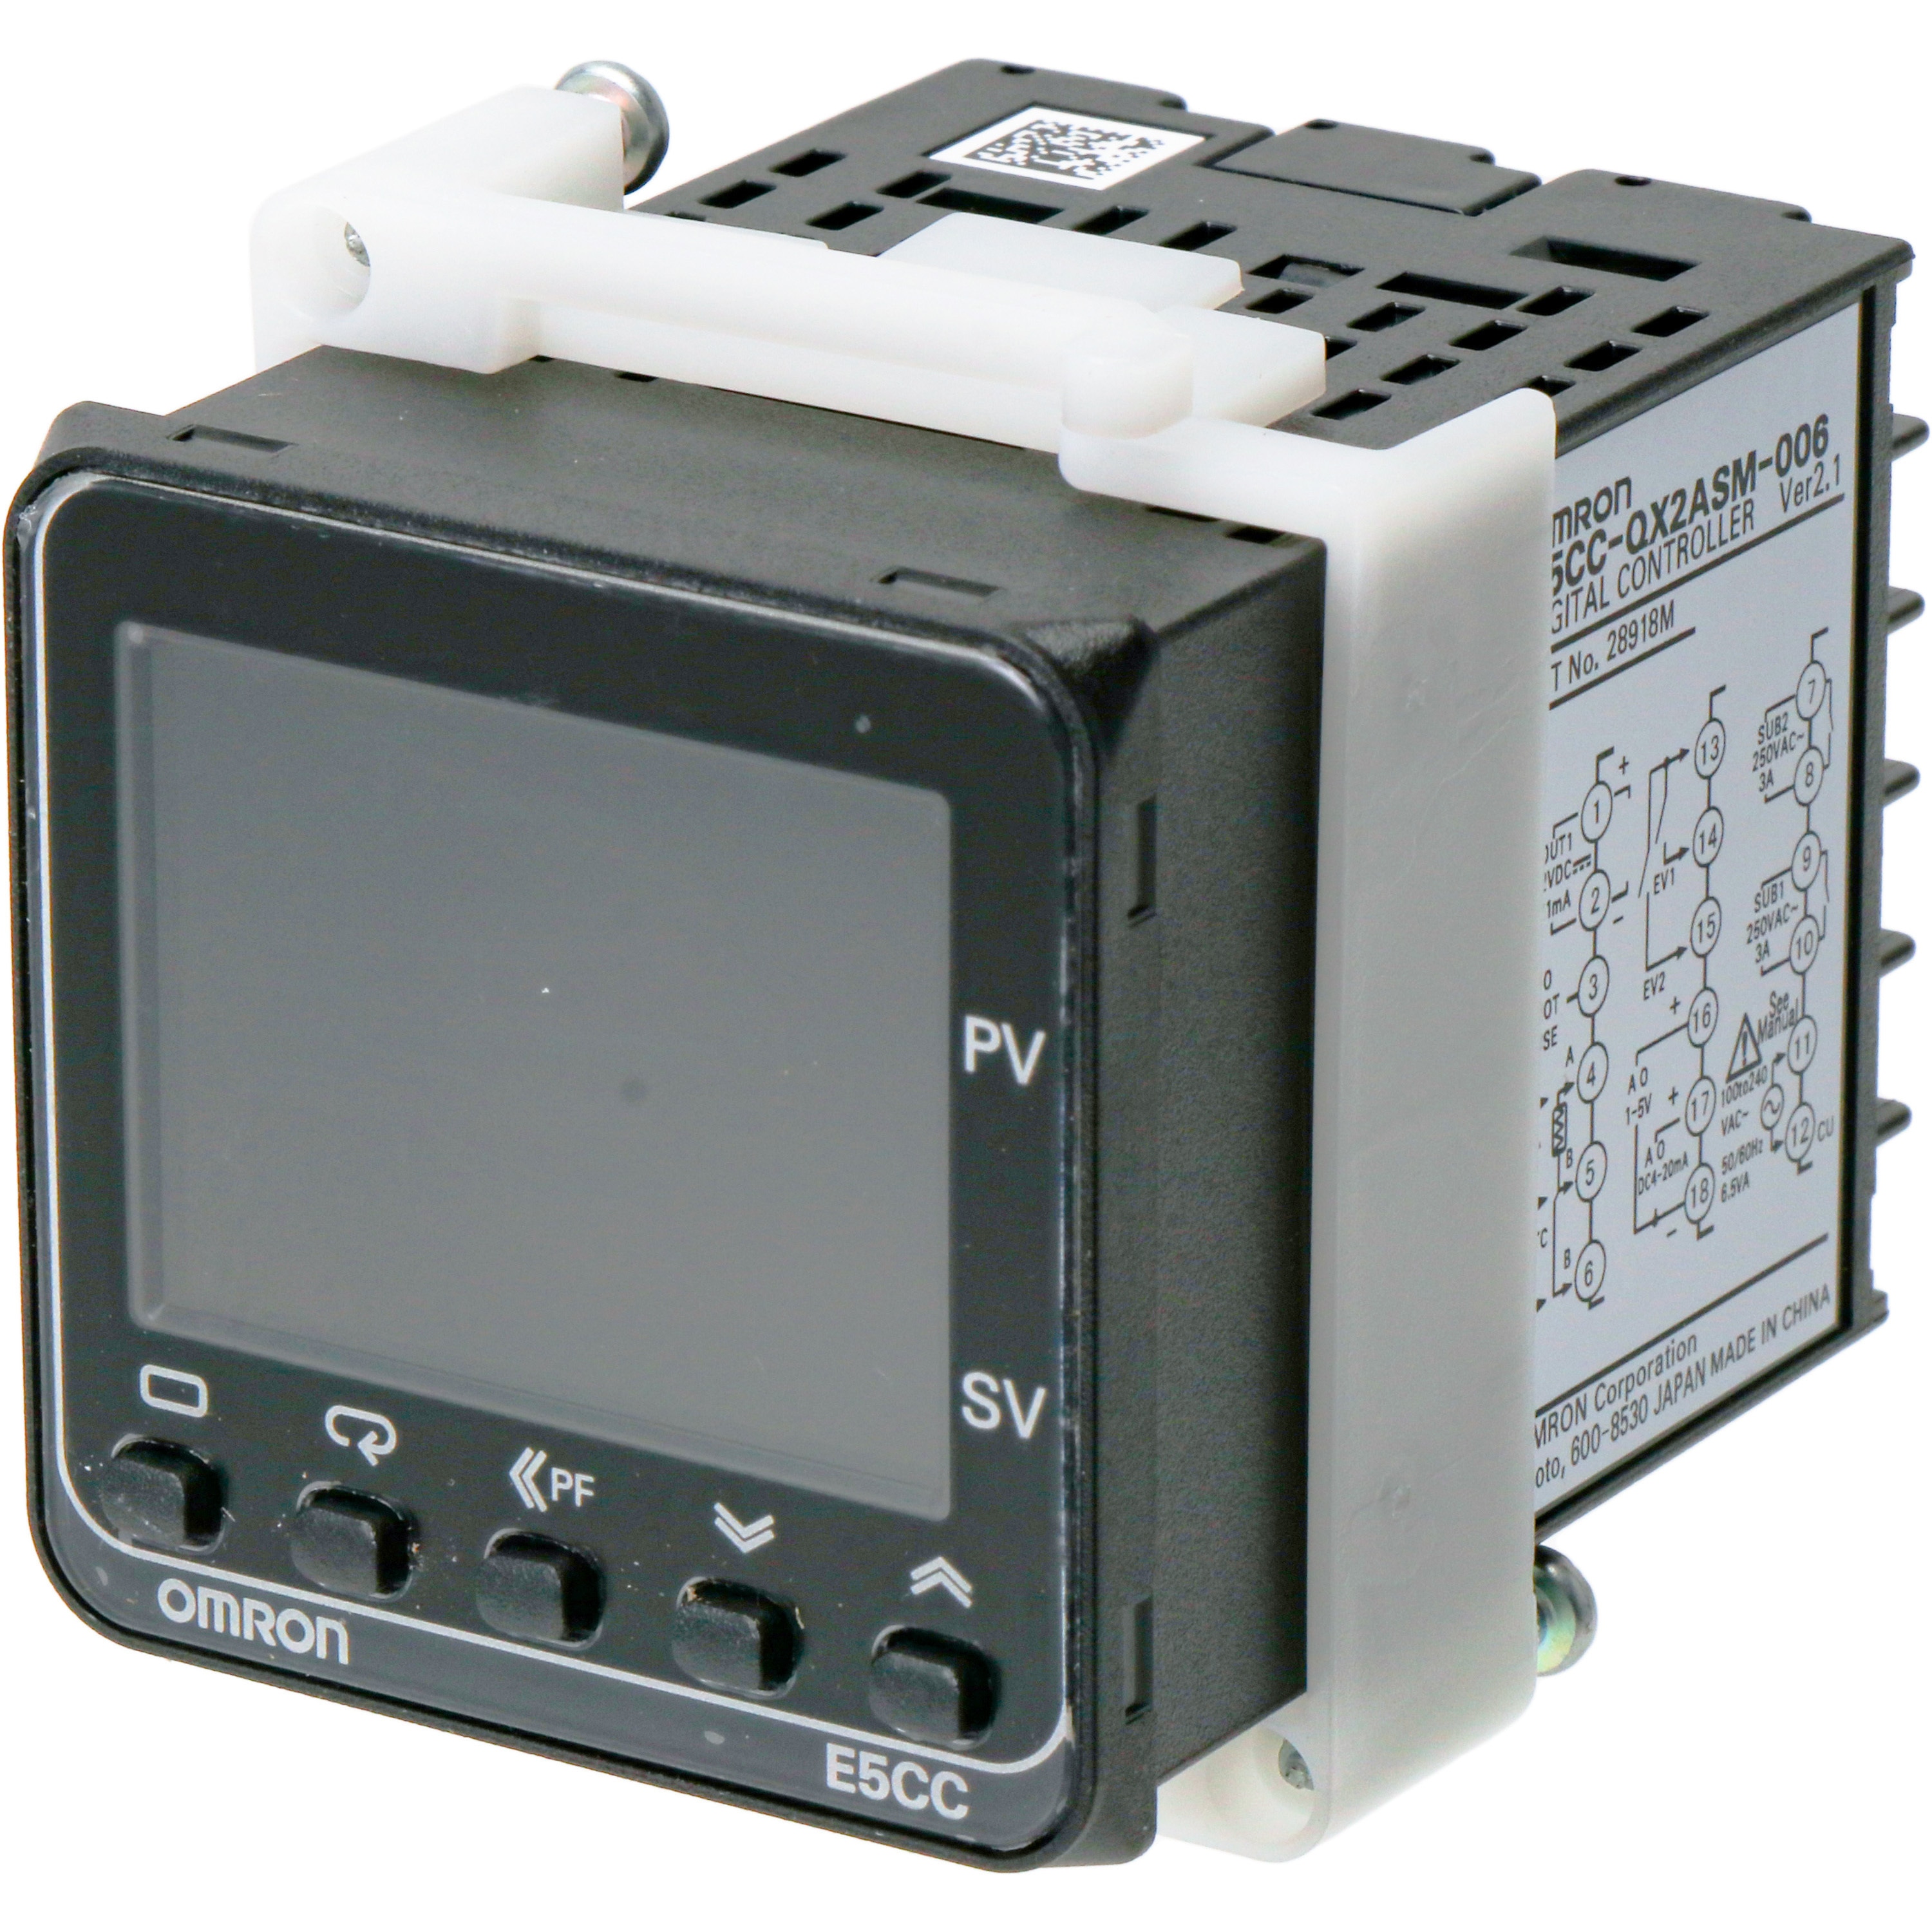 E5CC-QX2ASM-006 温度調節器(デジタル調節計) E5CC 1個 オムロン(omron